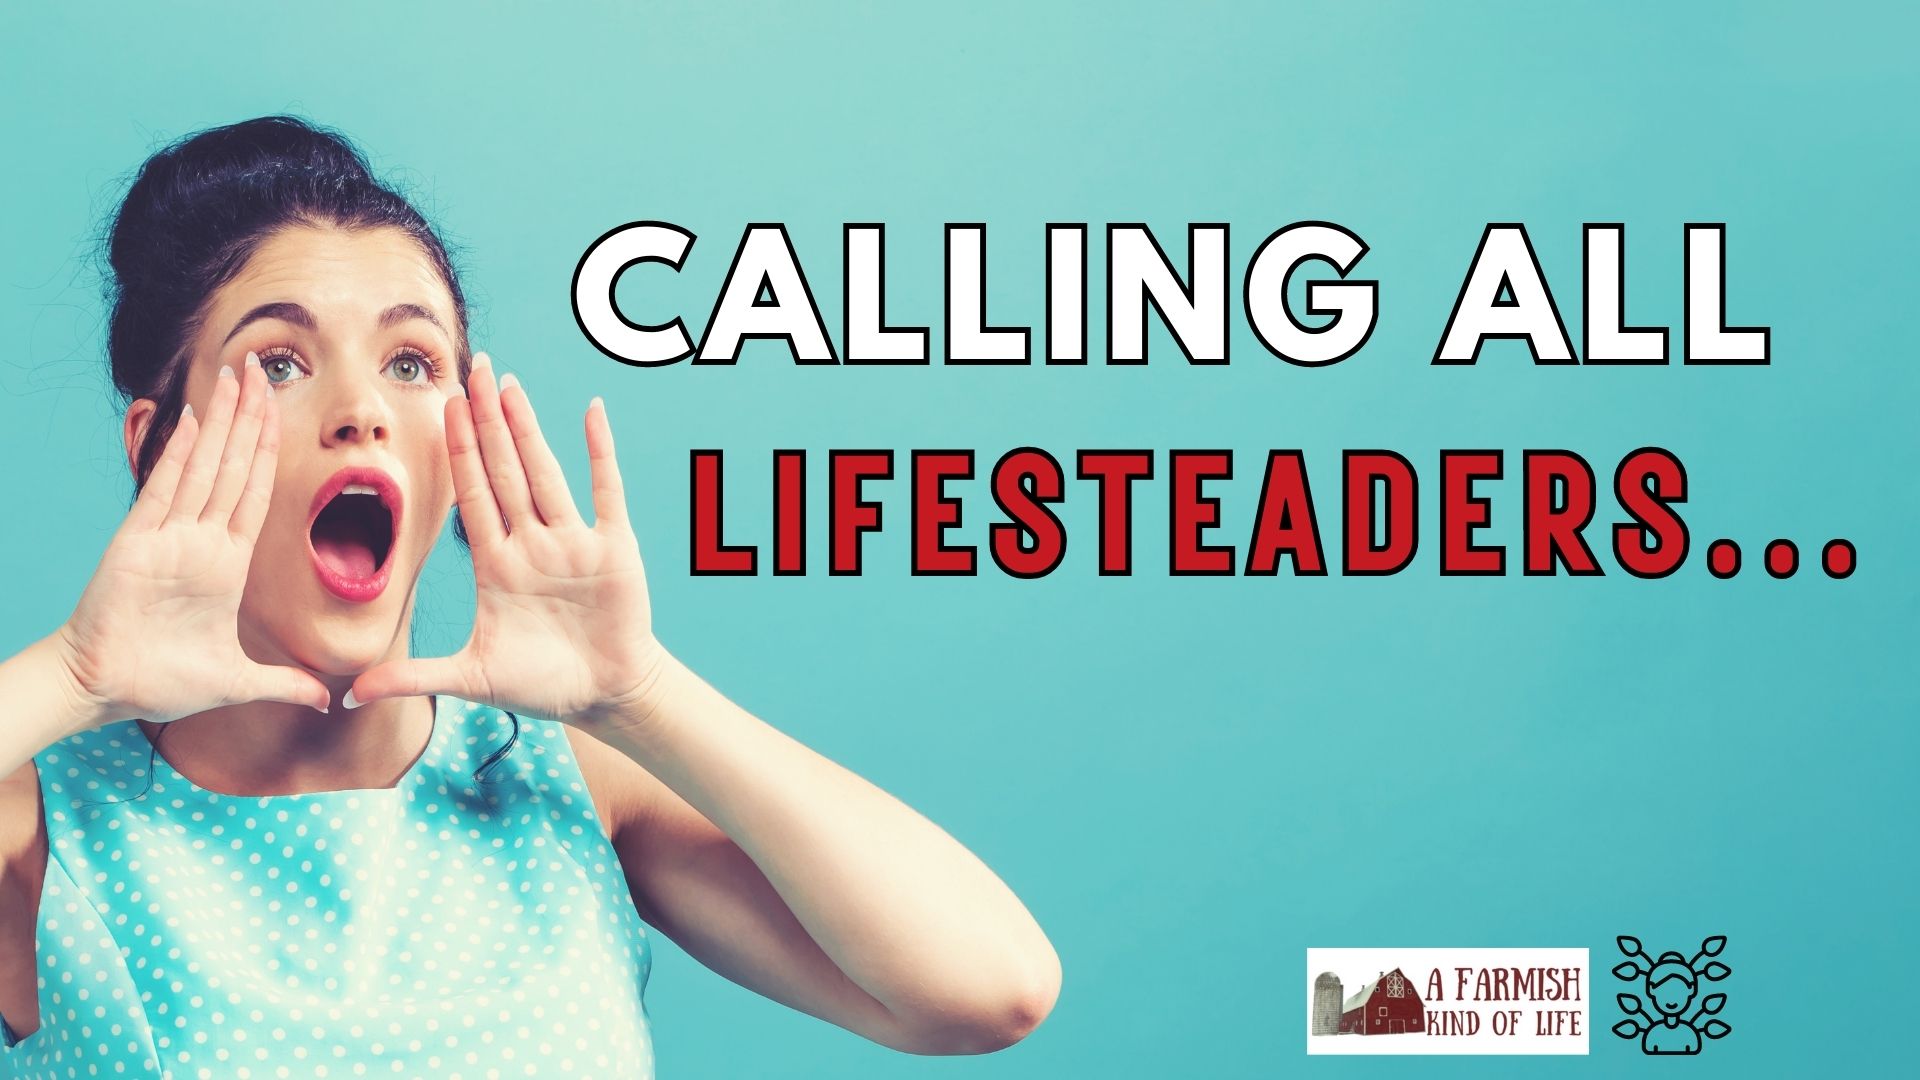 245: Calling all Lifesteaders